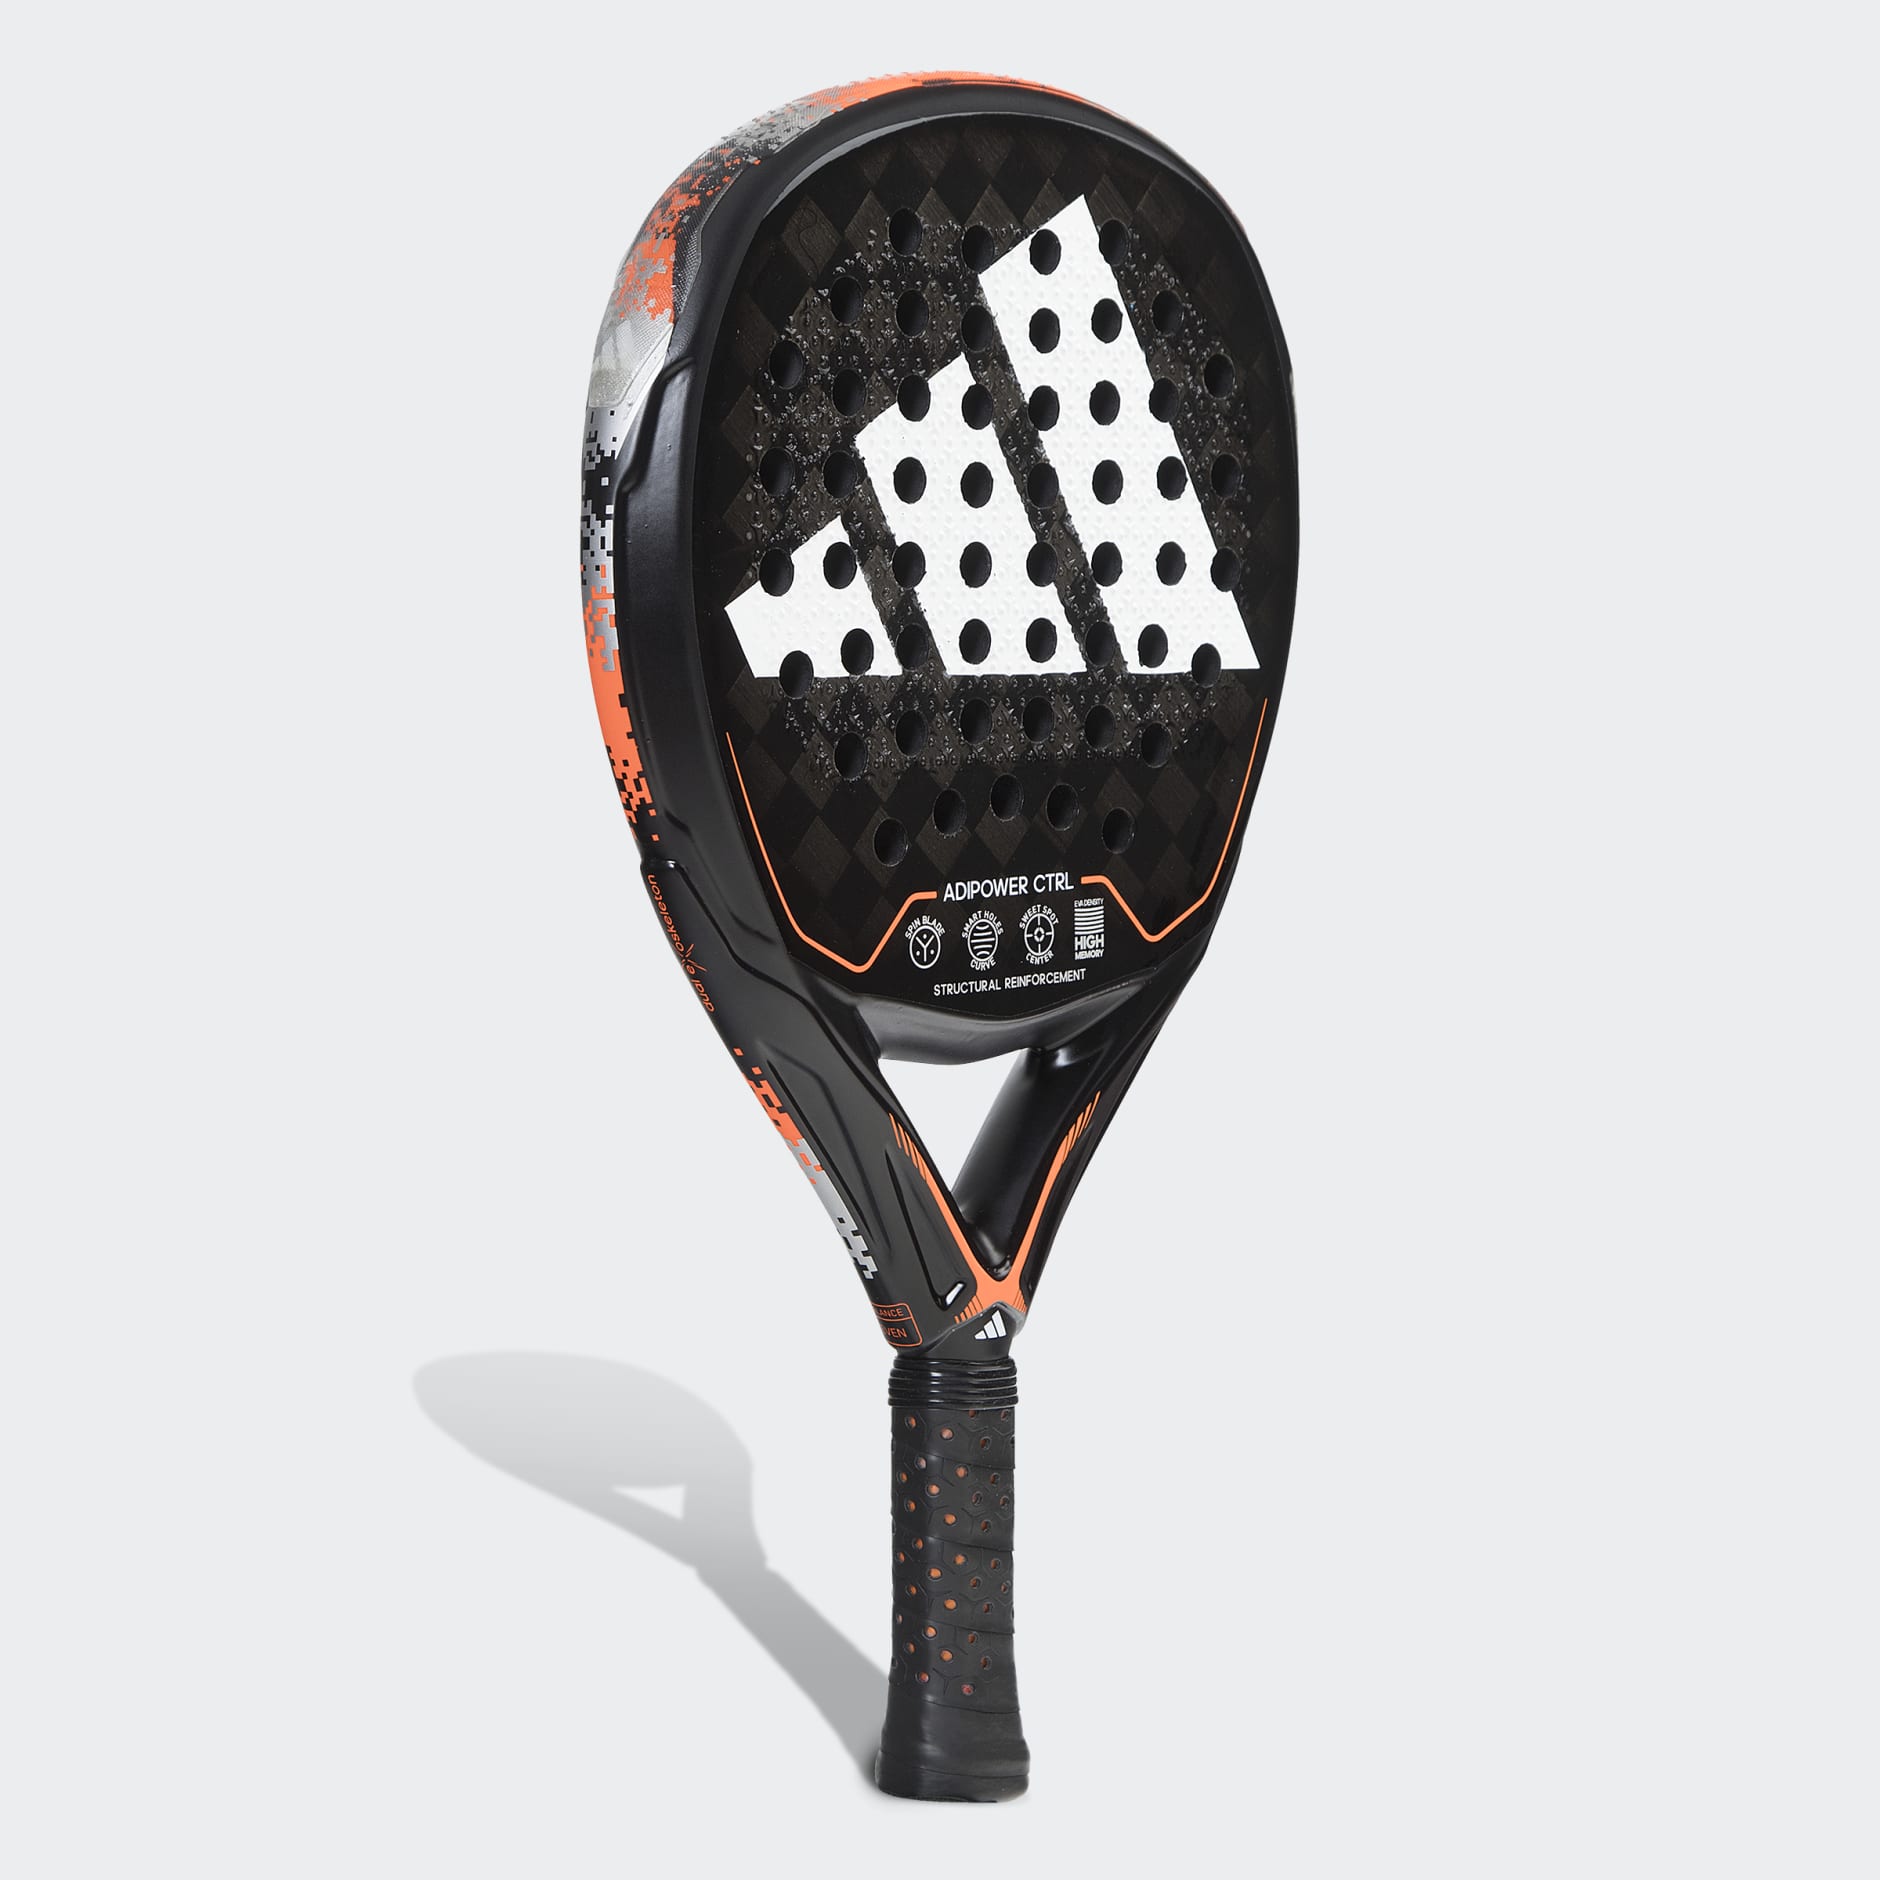 Descifrar boca viudo adidas Adipower Control 3.2 Padel Racket - Black | adidas SA